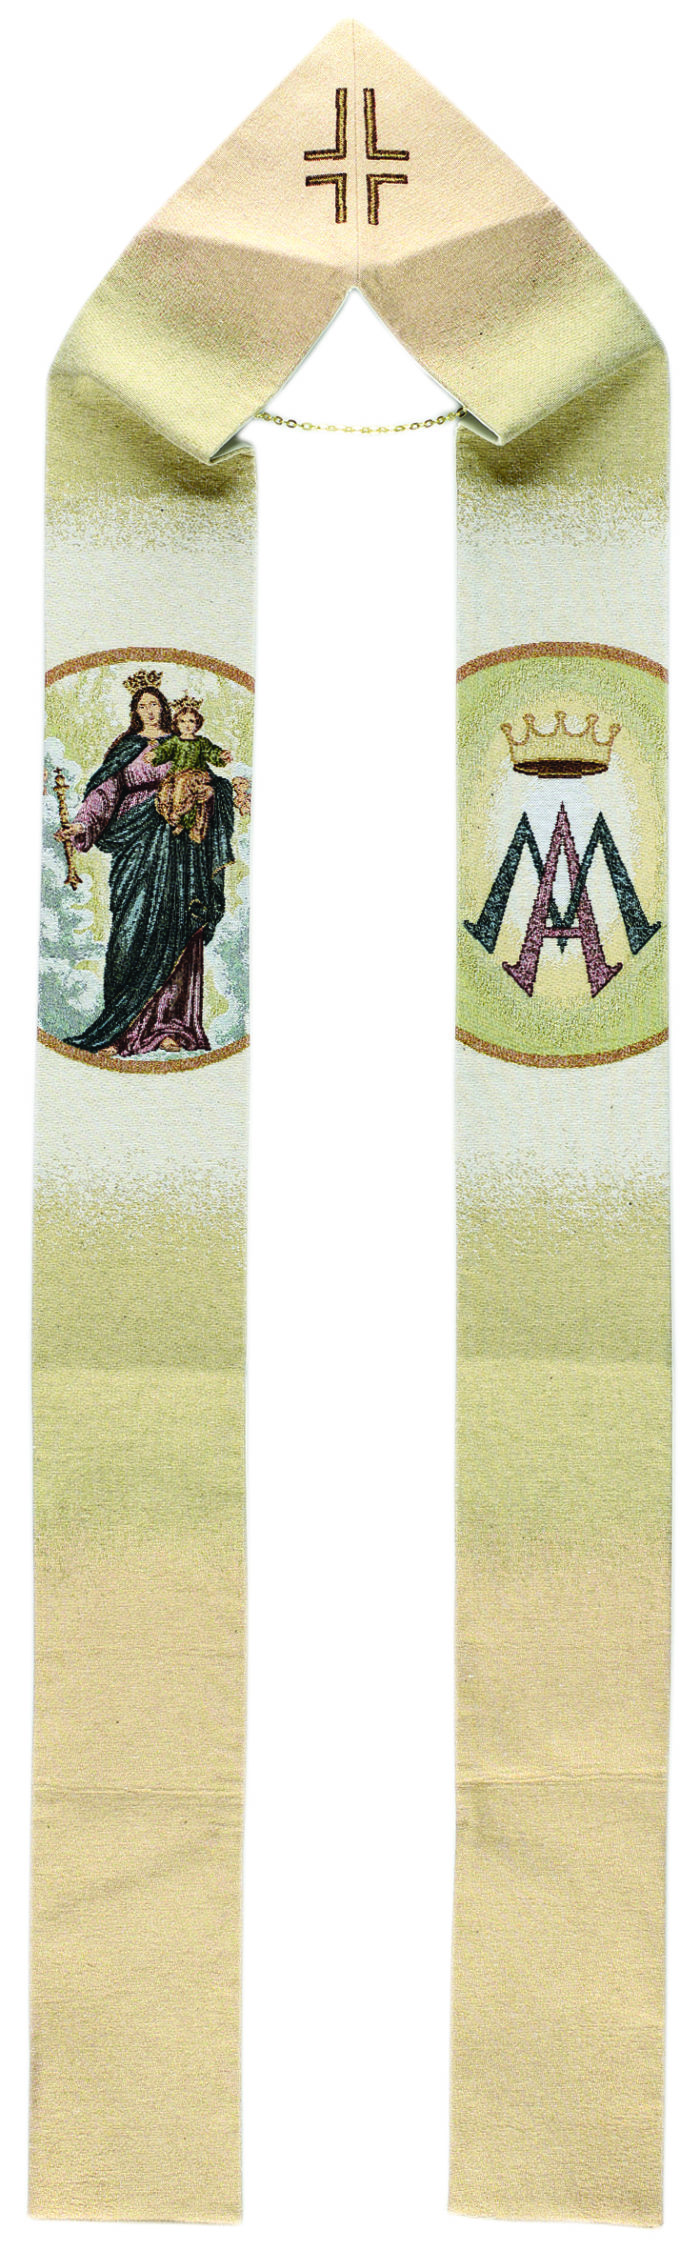 Stola mariana "Ausiliatrice" interamente tessuta e ricamata al telaio con effigie della Vergine Ausiliatrice